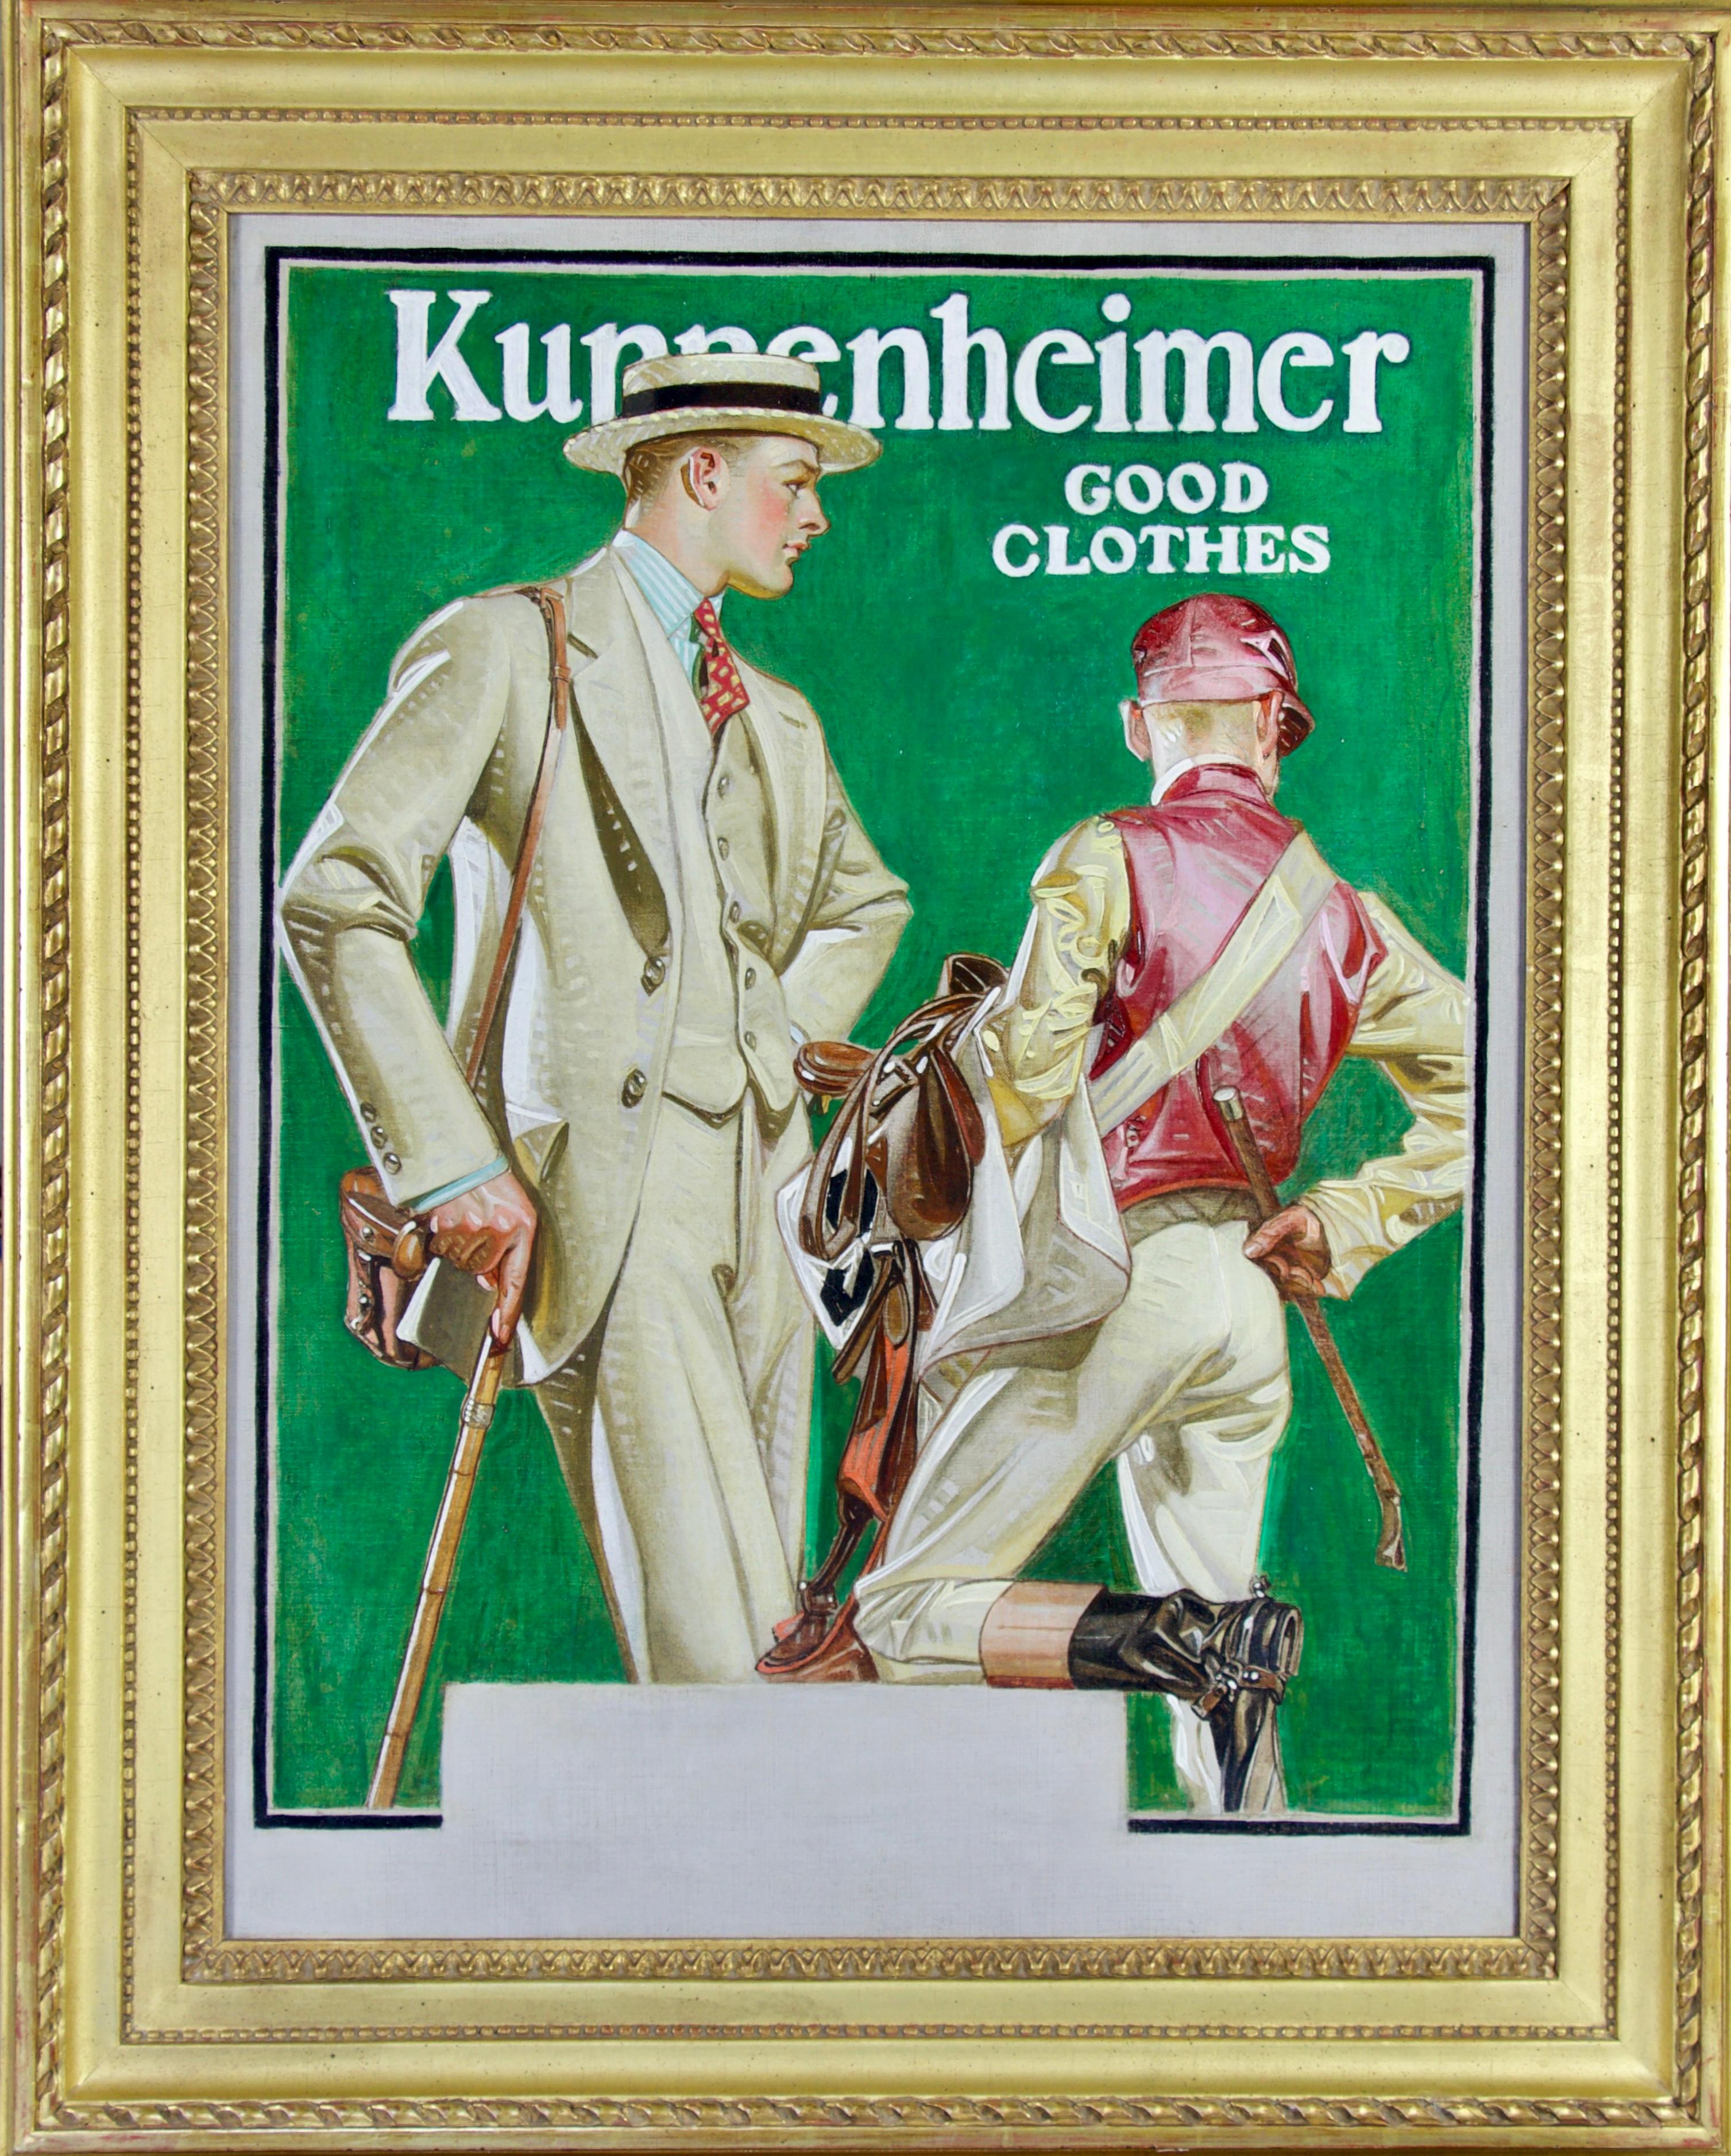 Kuppenheimer Good Clothes - Painting by Joseph Christian Leyendecker